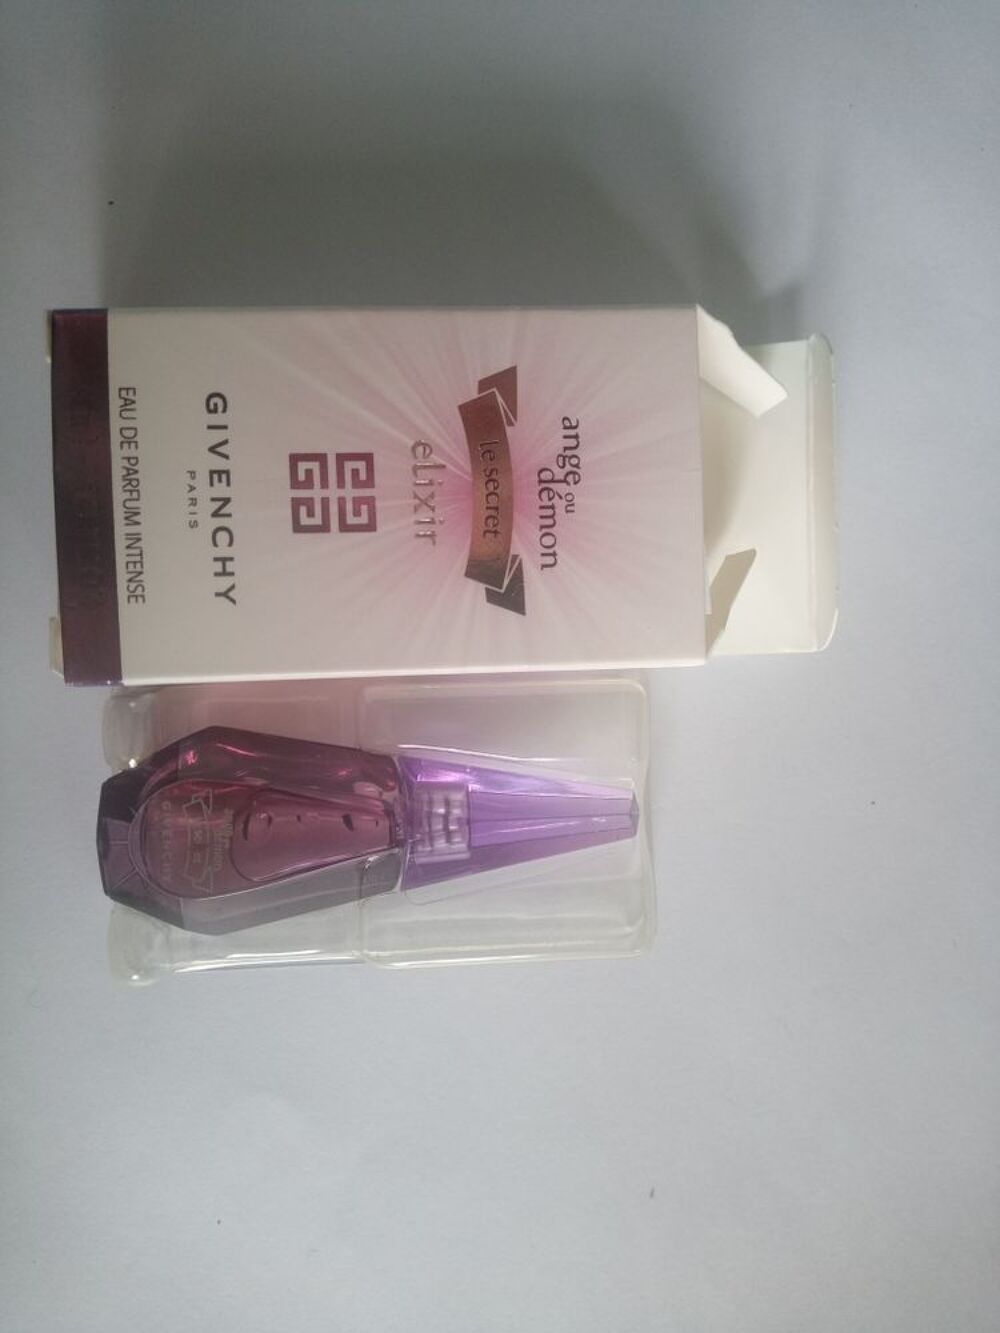 parfum Elixir Givenchy 